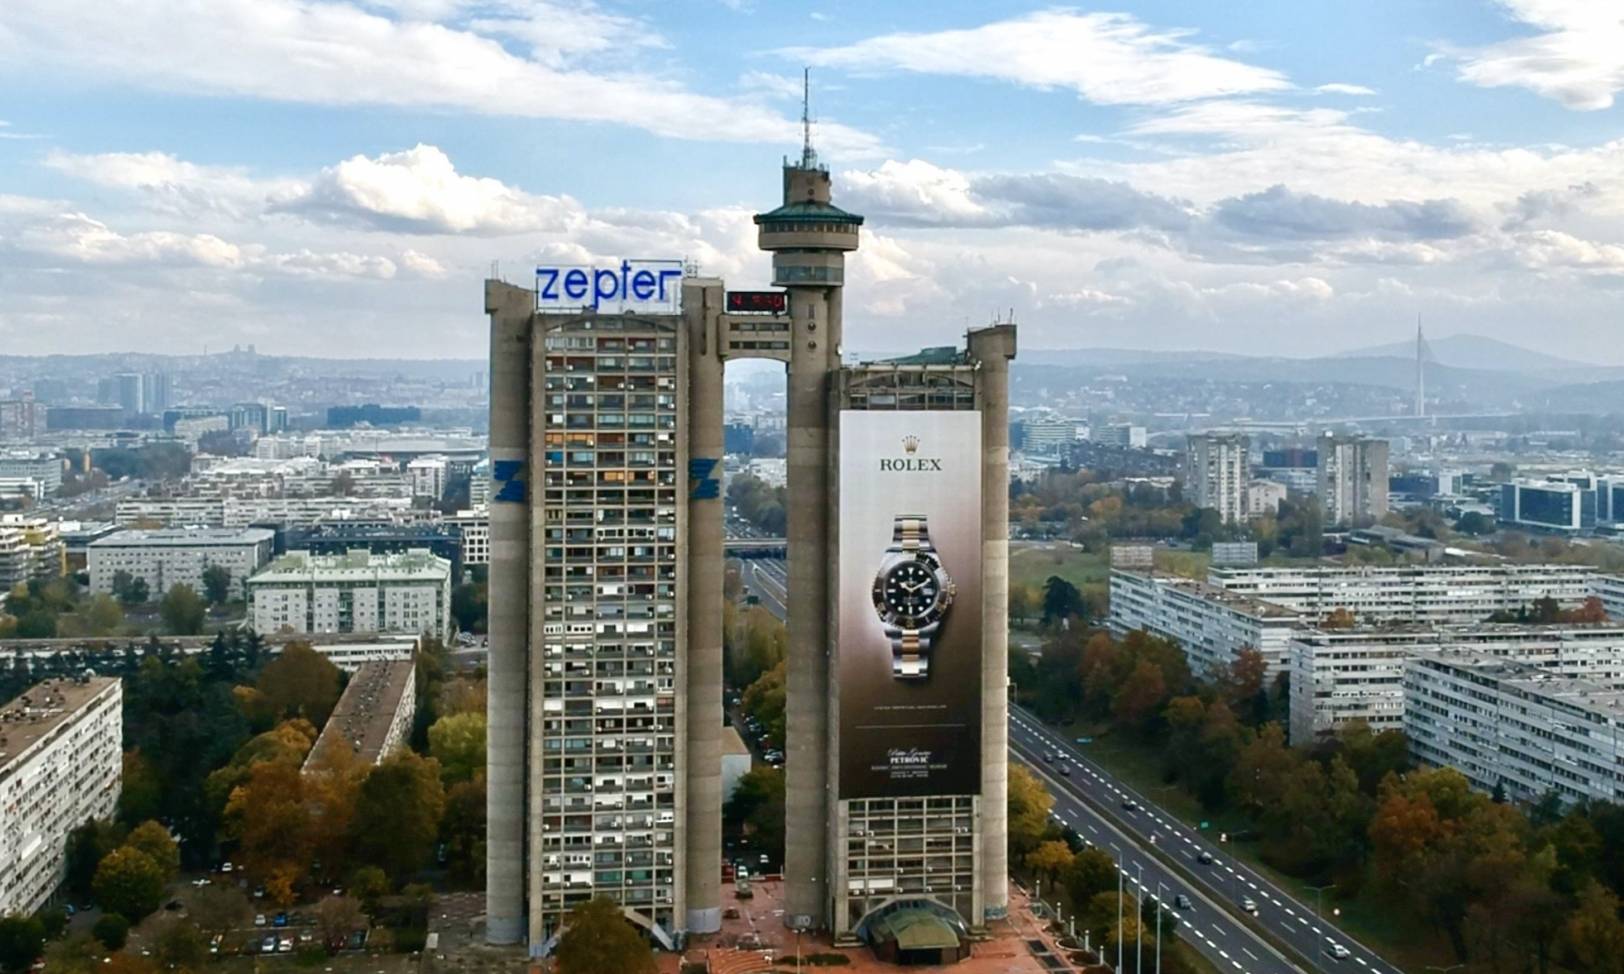 Genex tower - Belgrade’s symbol of development